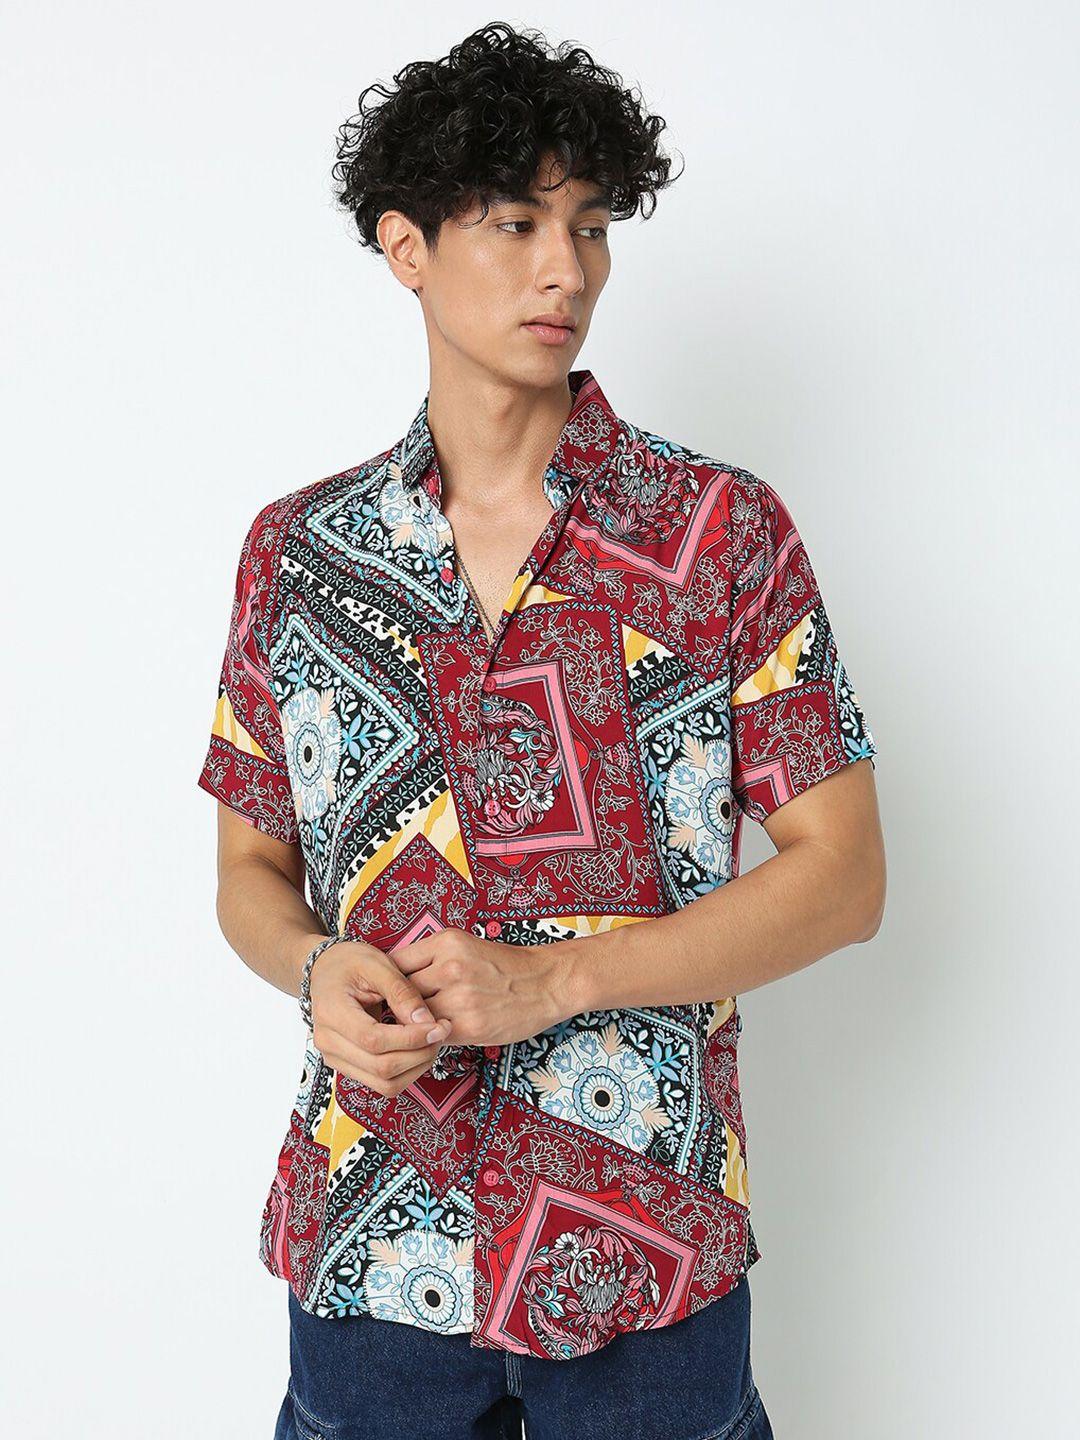 7shores classic ethnic motifs printed spread collar casual shirt